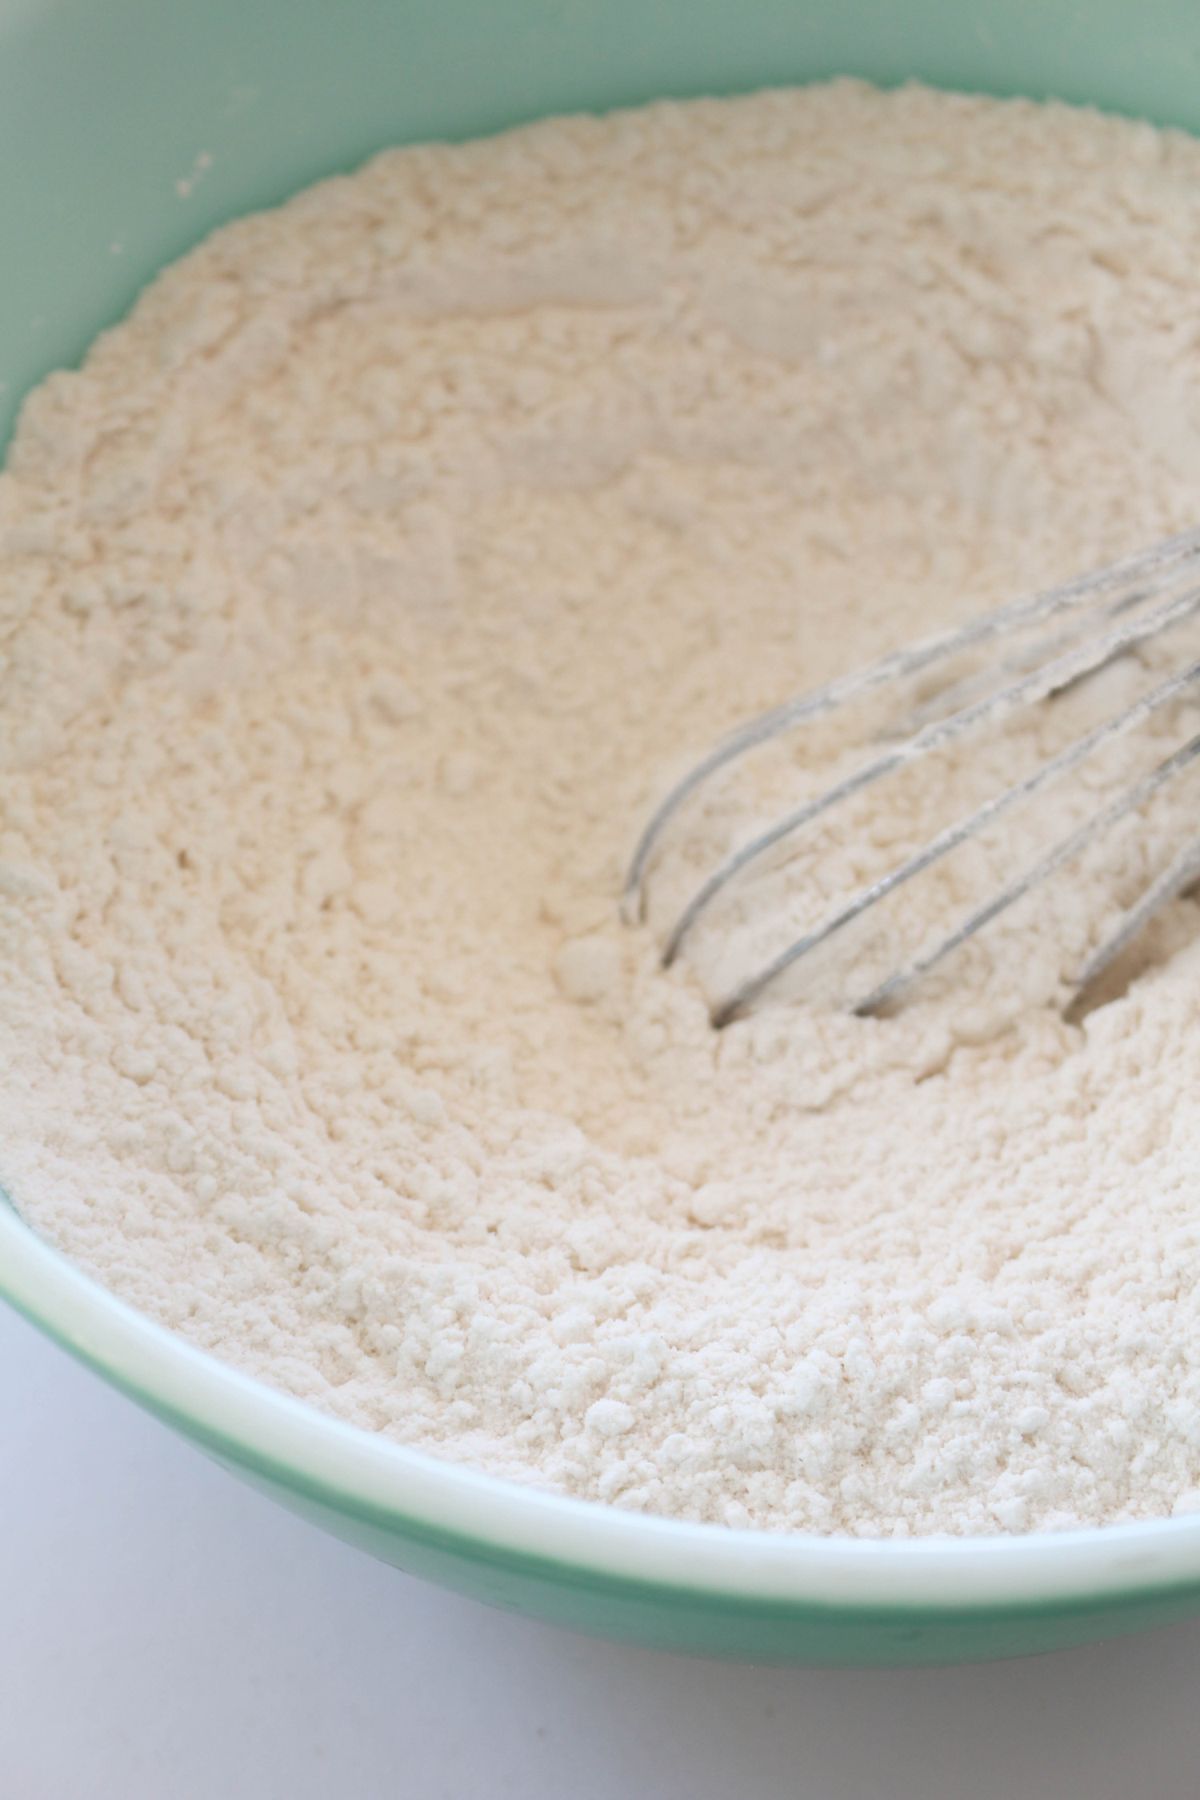 Mix flour corn starch salt baking powder